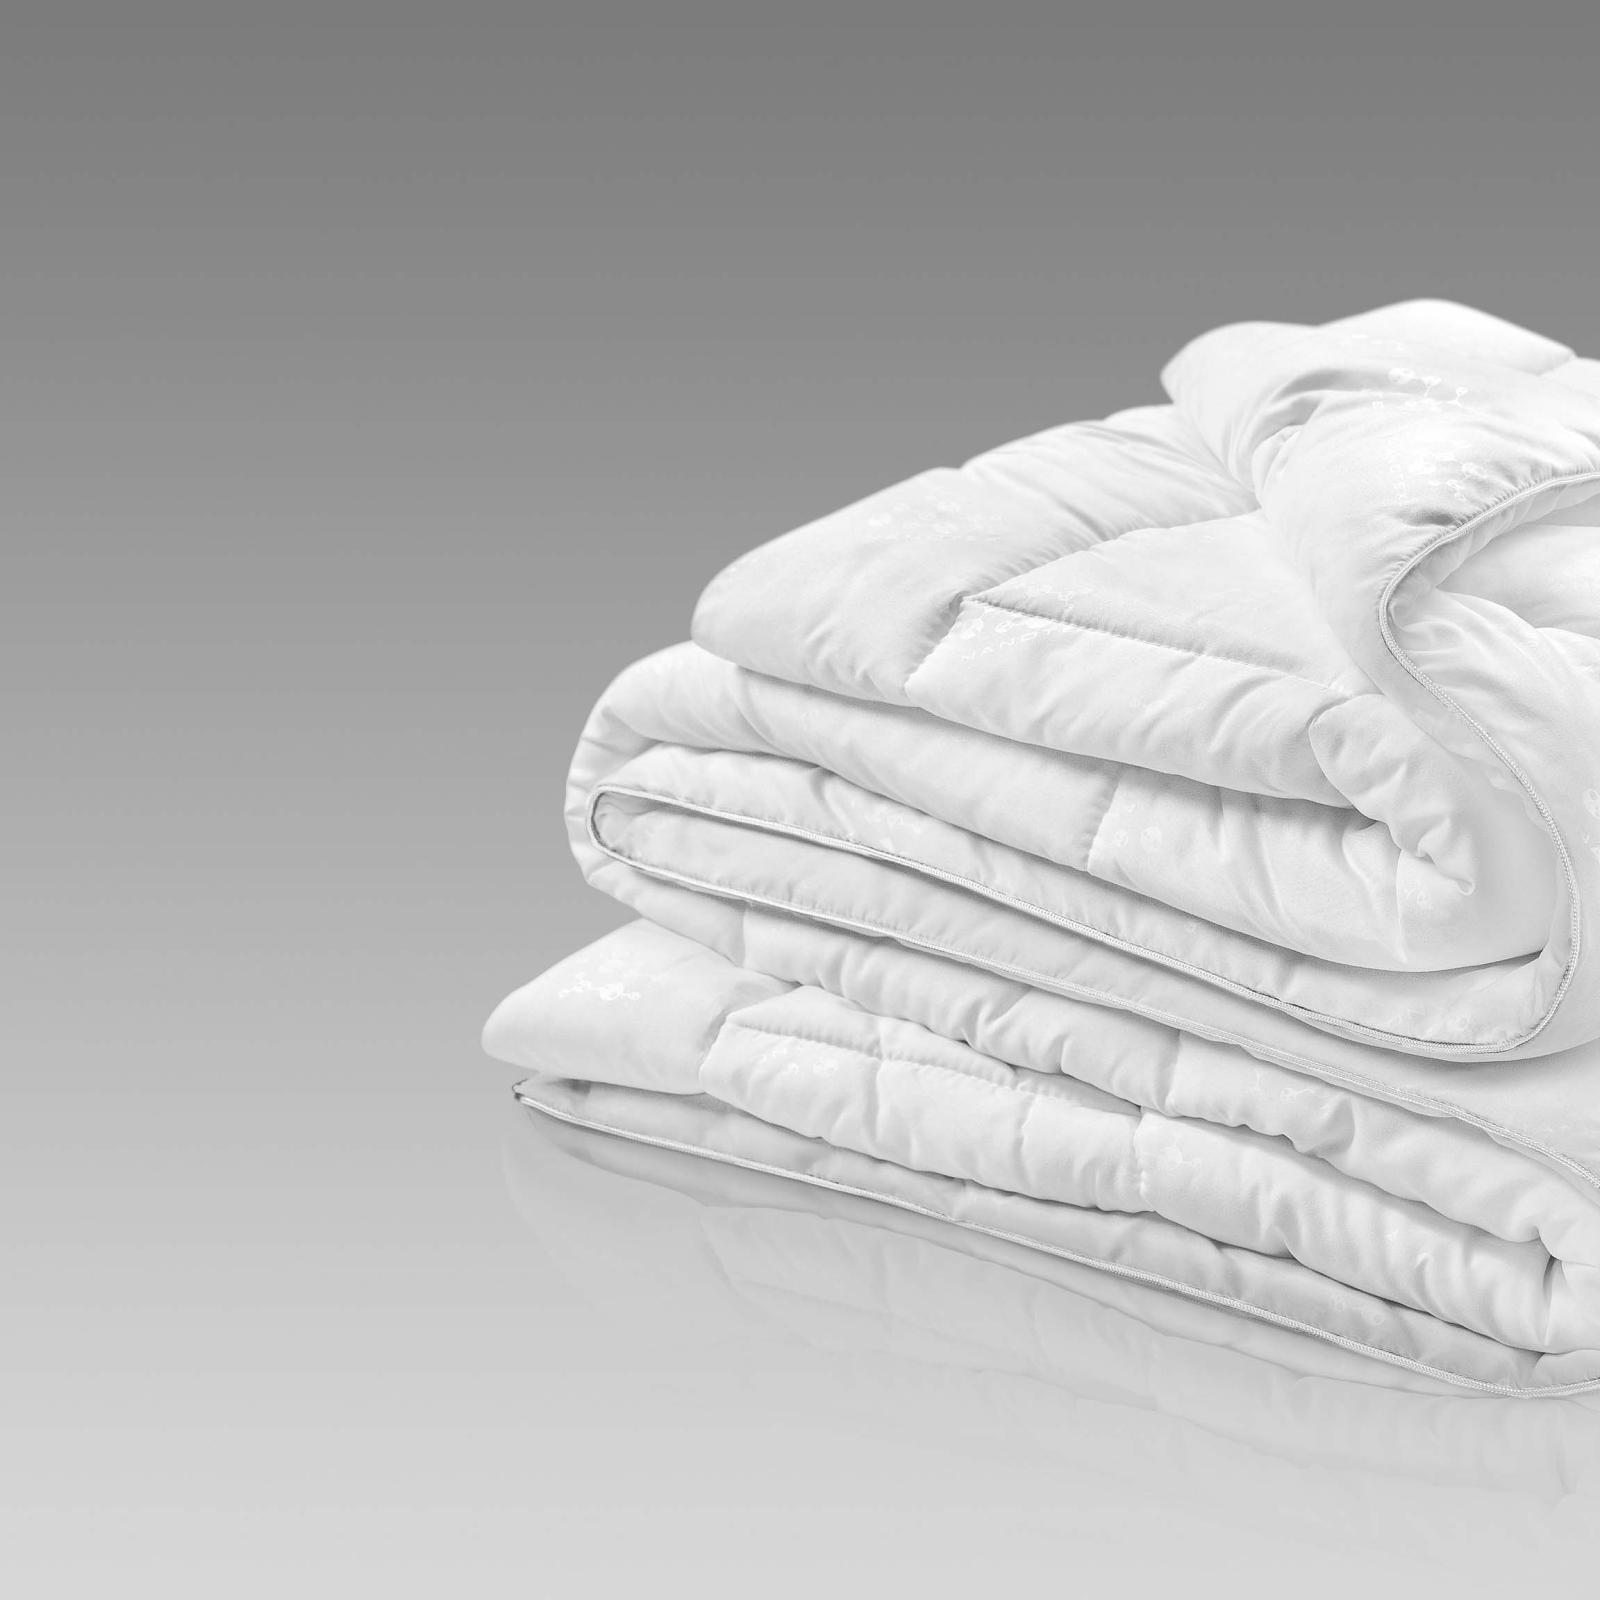 Одеяло Гелиос 220х240 см (20.04.12.0122), цвет белый, размер 220х240 см - фото 9